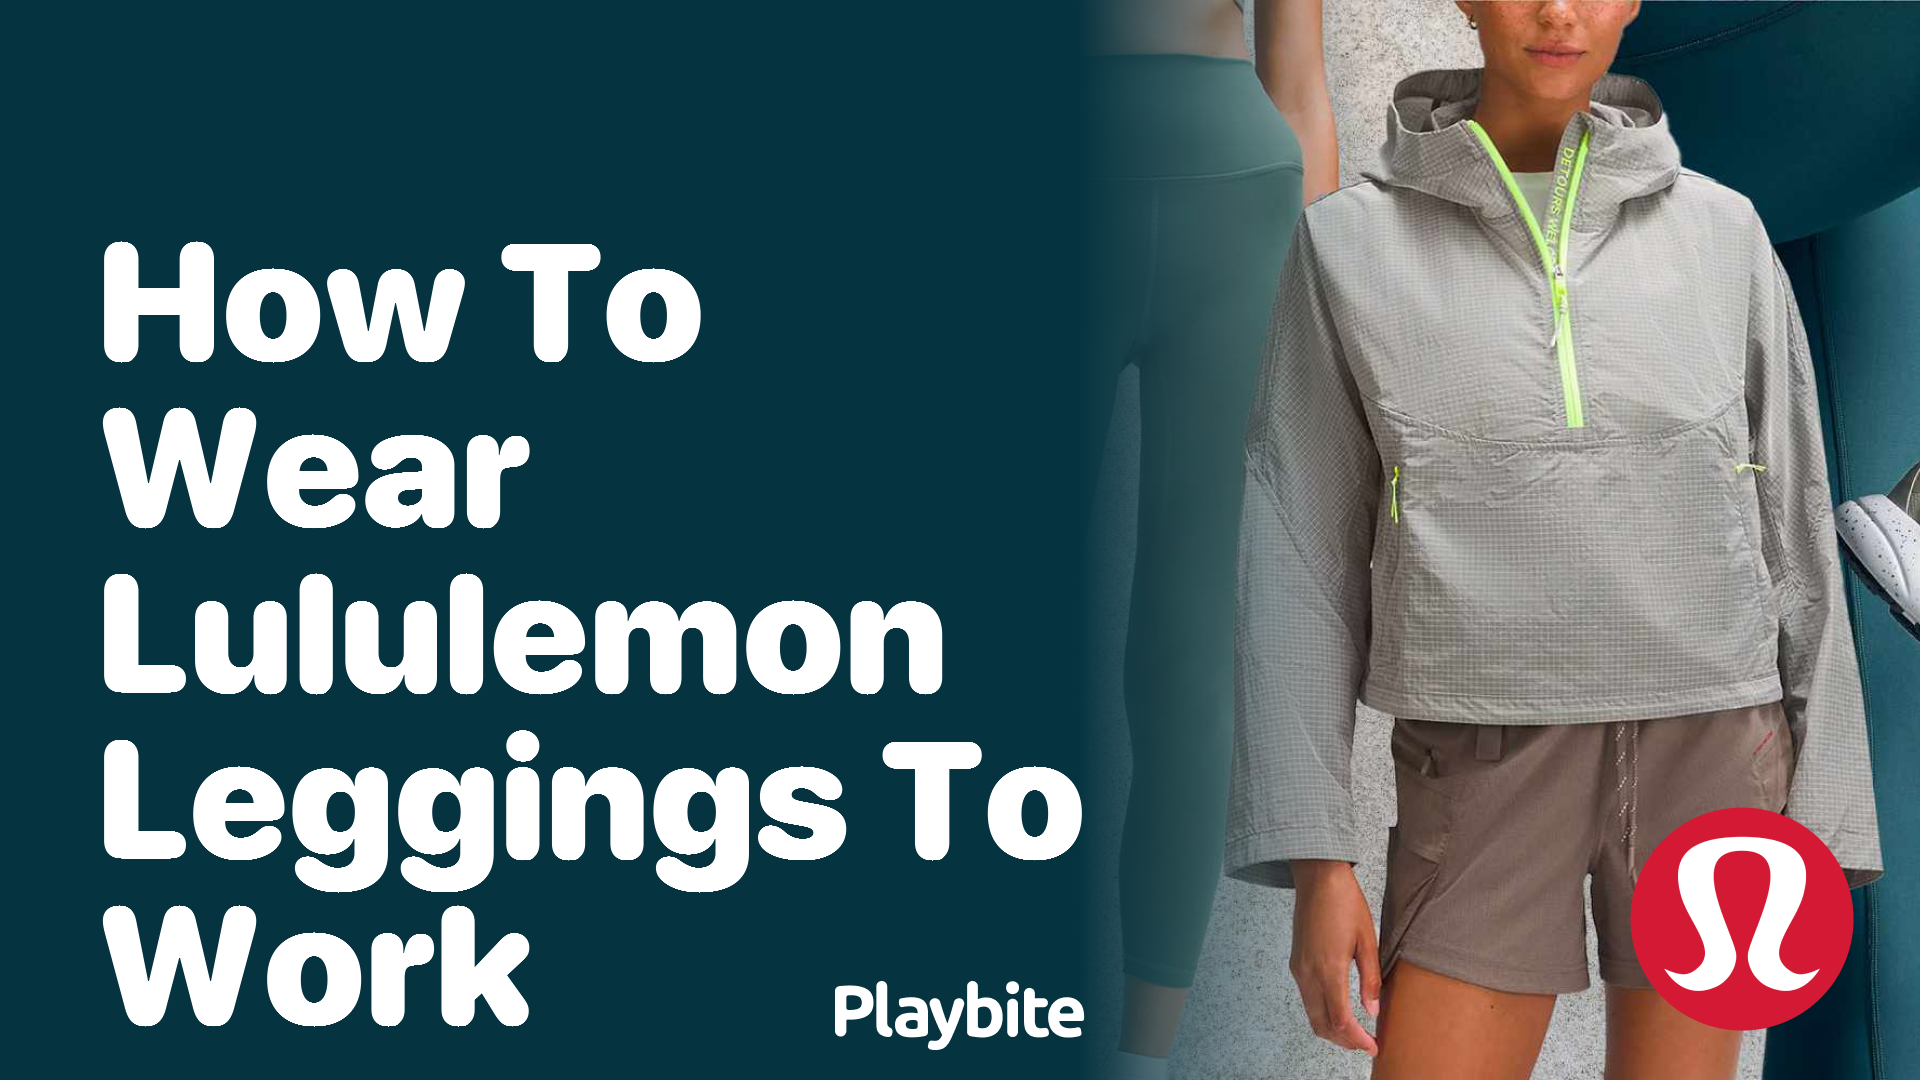 How To Wear Lululemon Leggings To Work